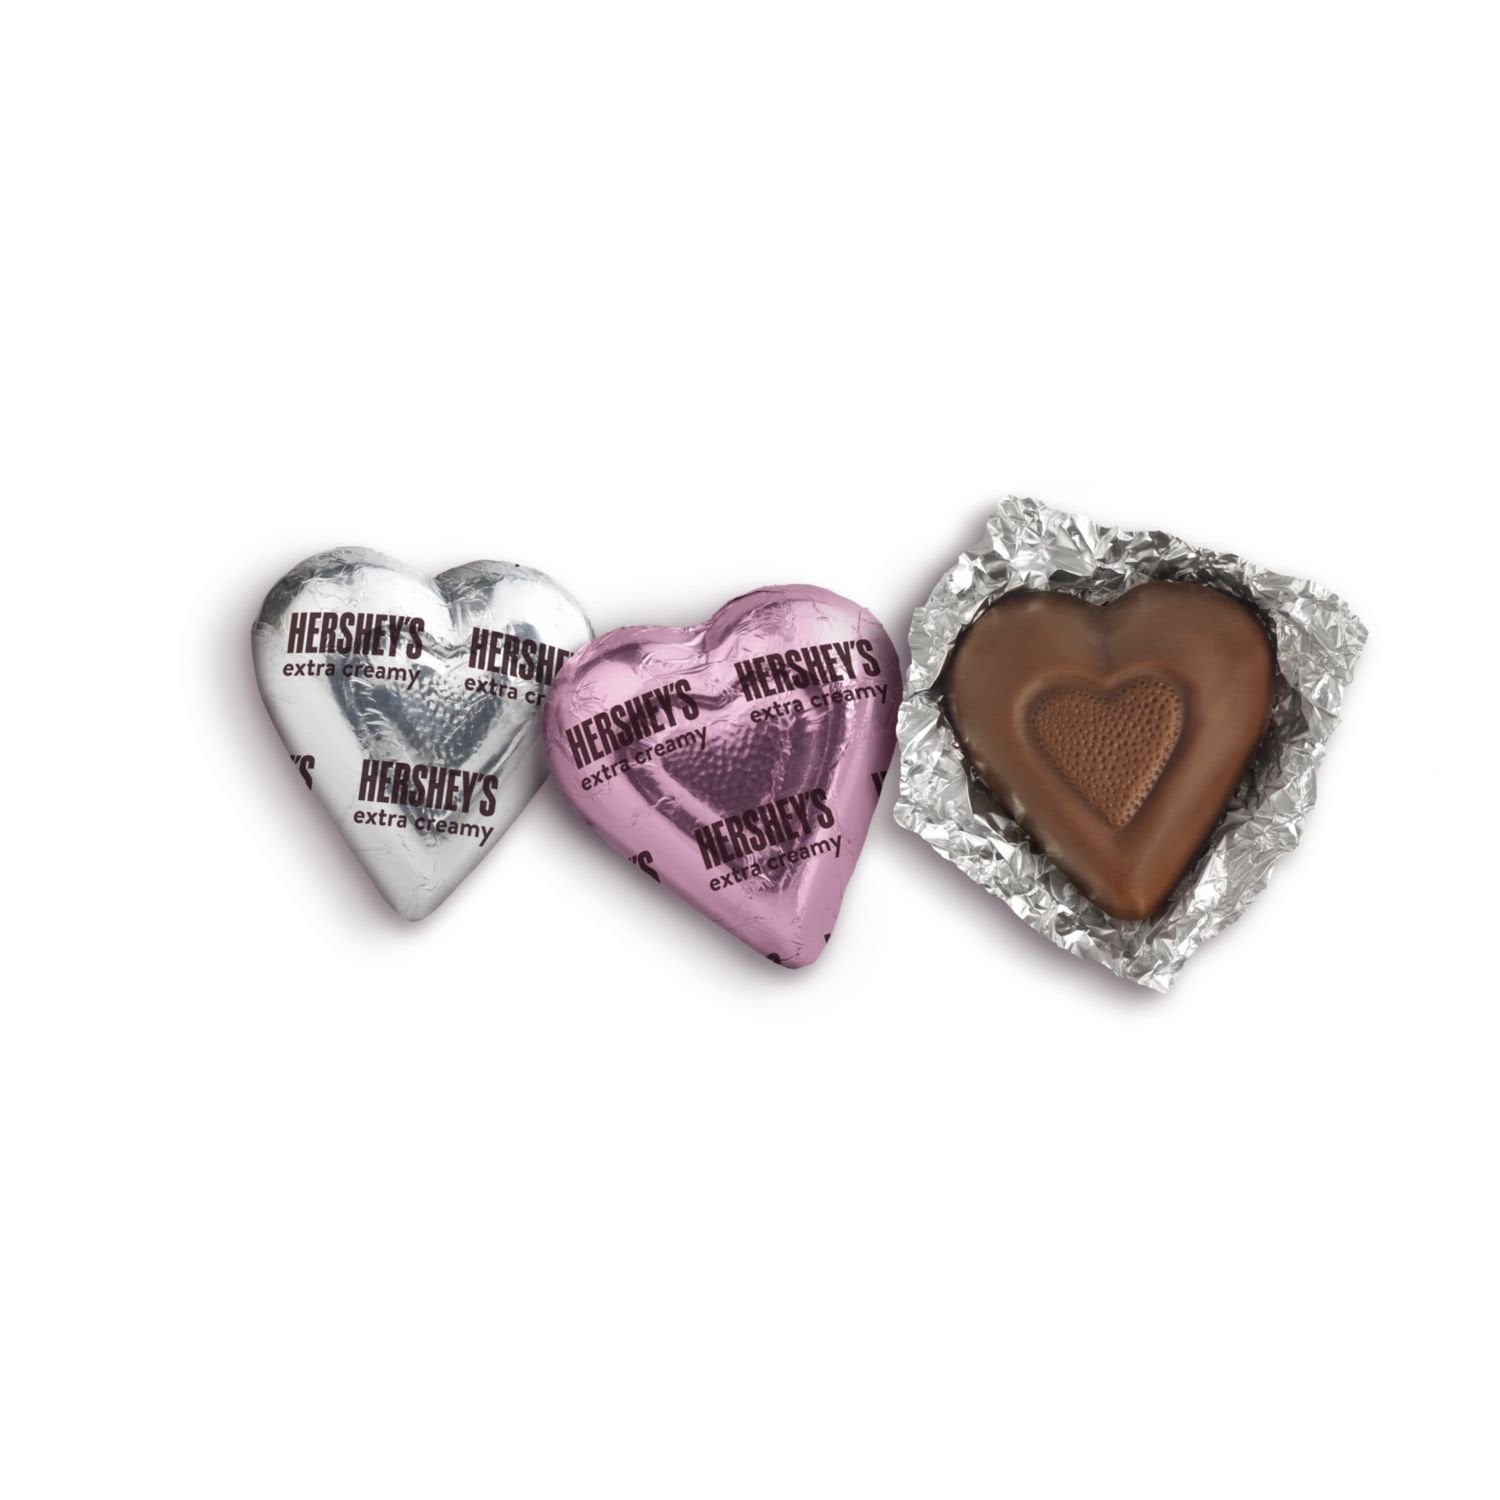 Hershey's Extra Creamy Milk Chocolate Valentine's Hearts, 9.2oz